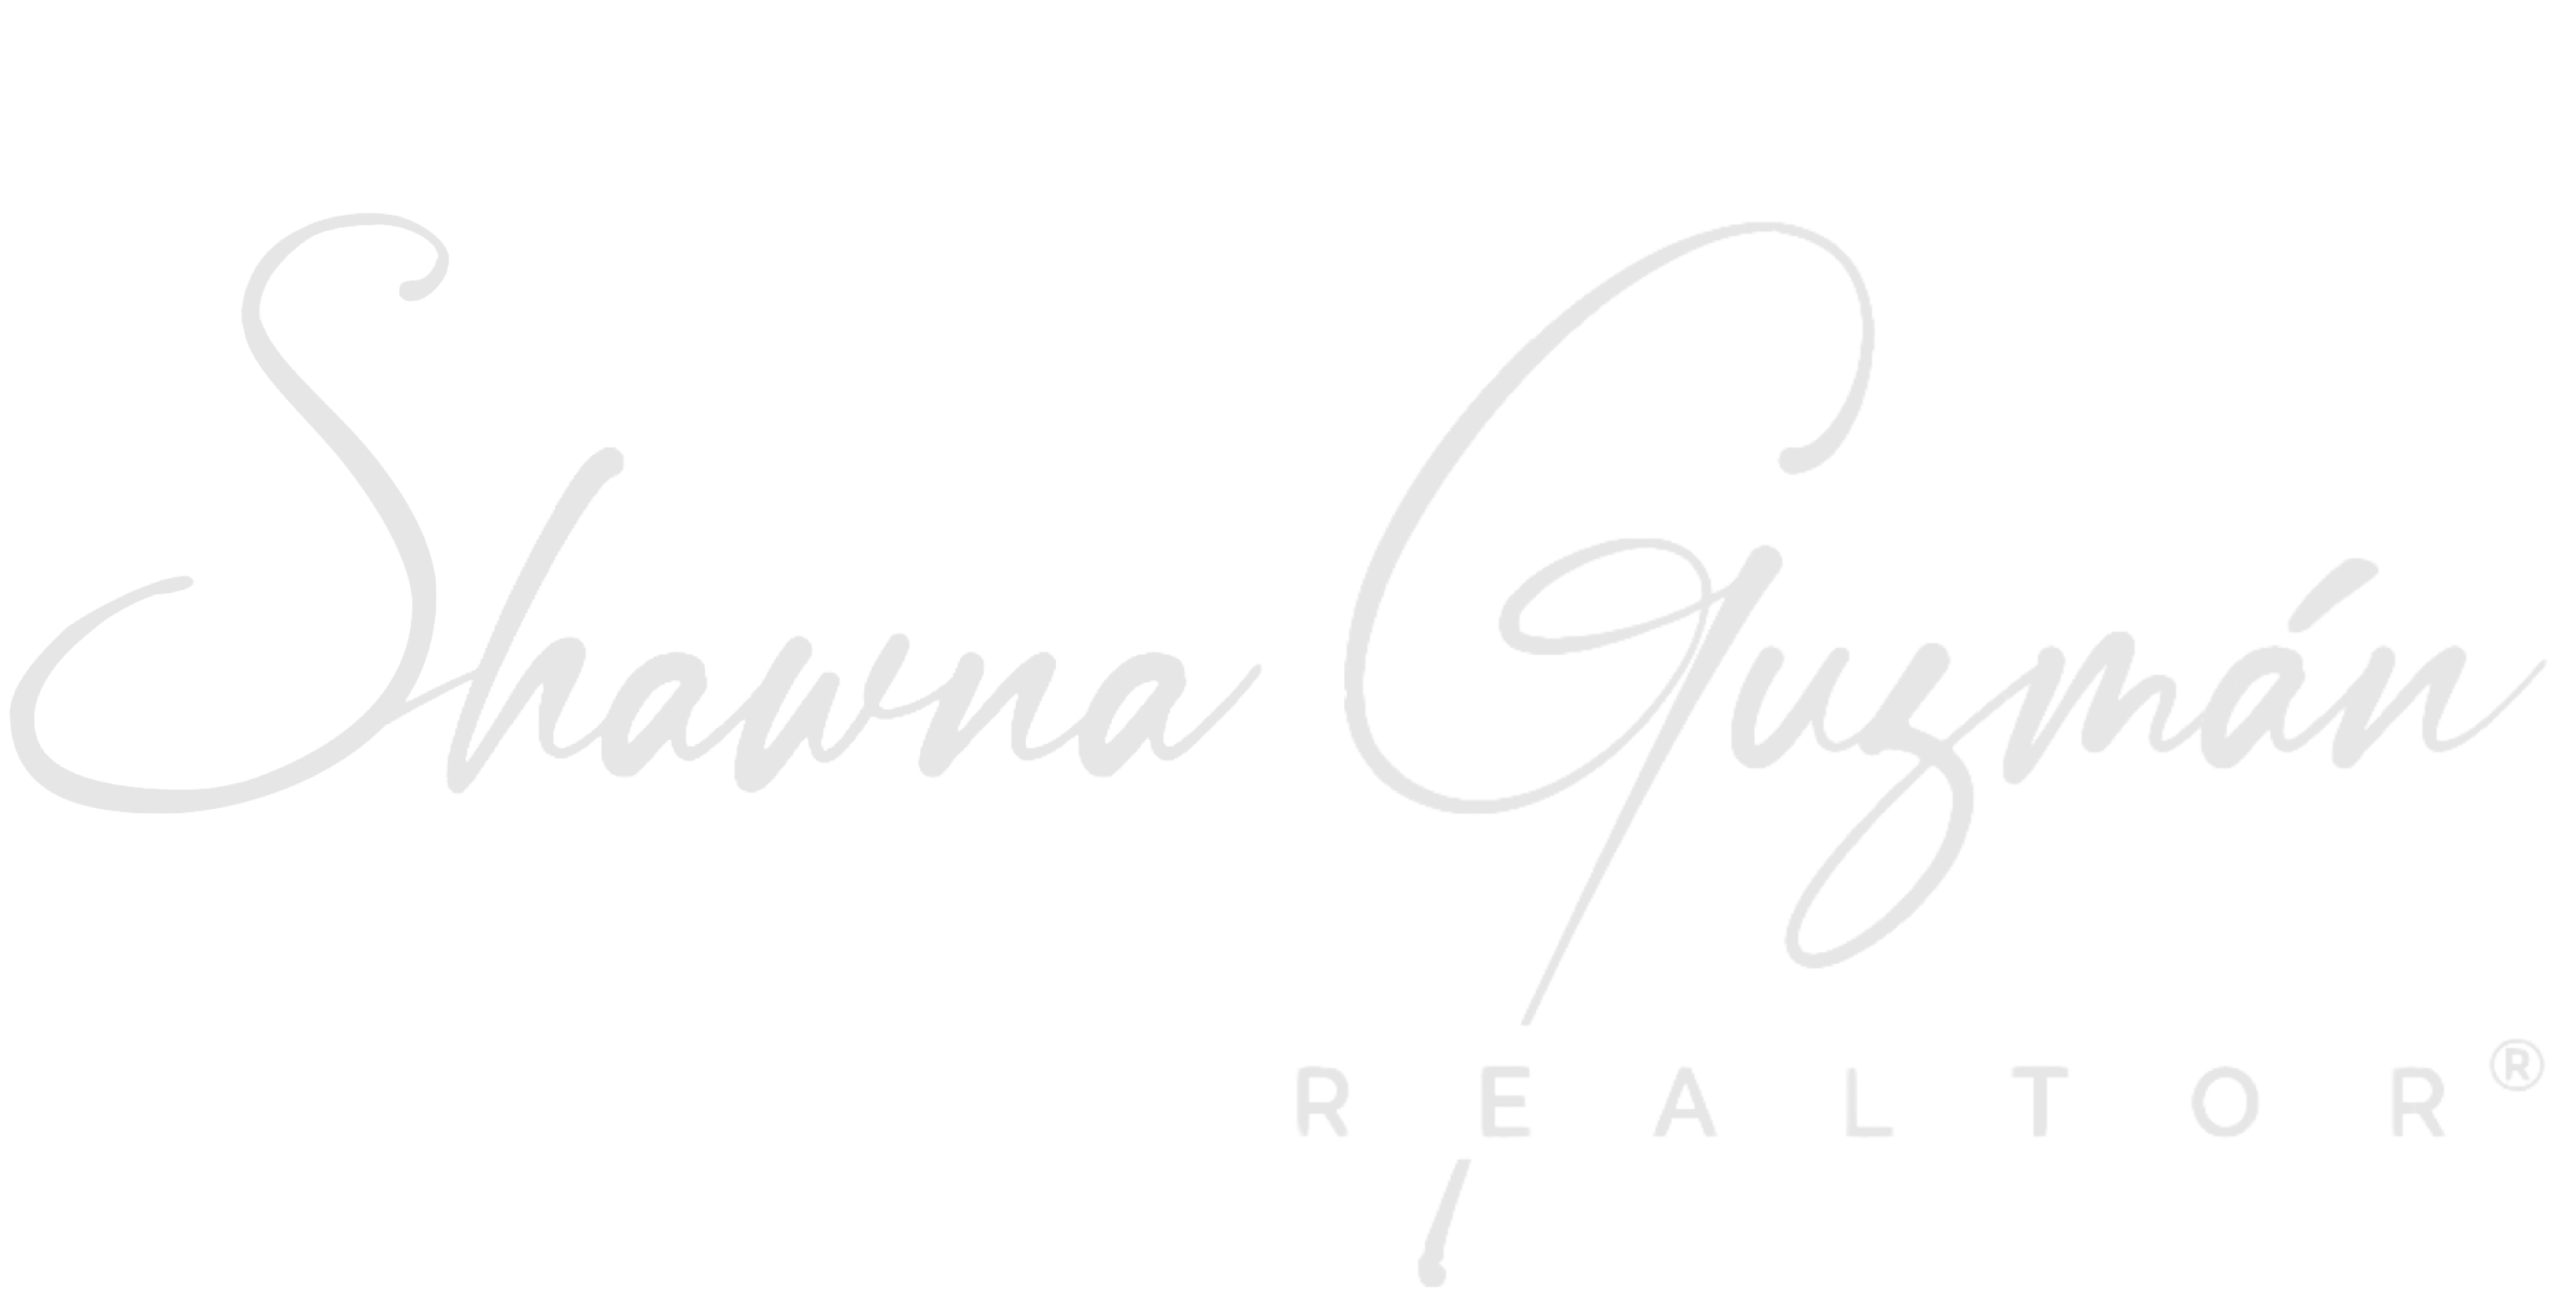 Shawna Guzmãn logo in white